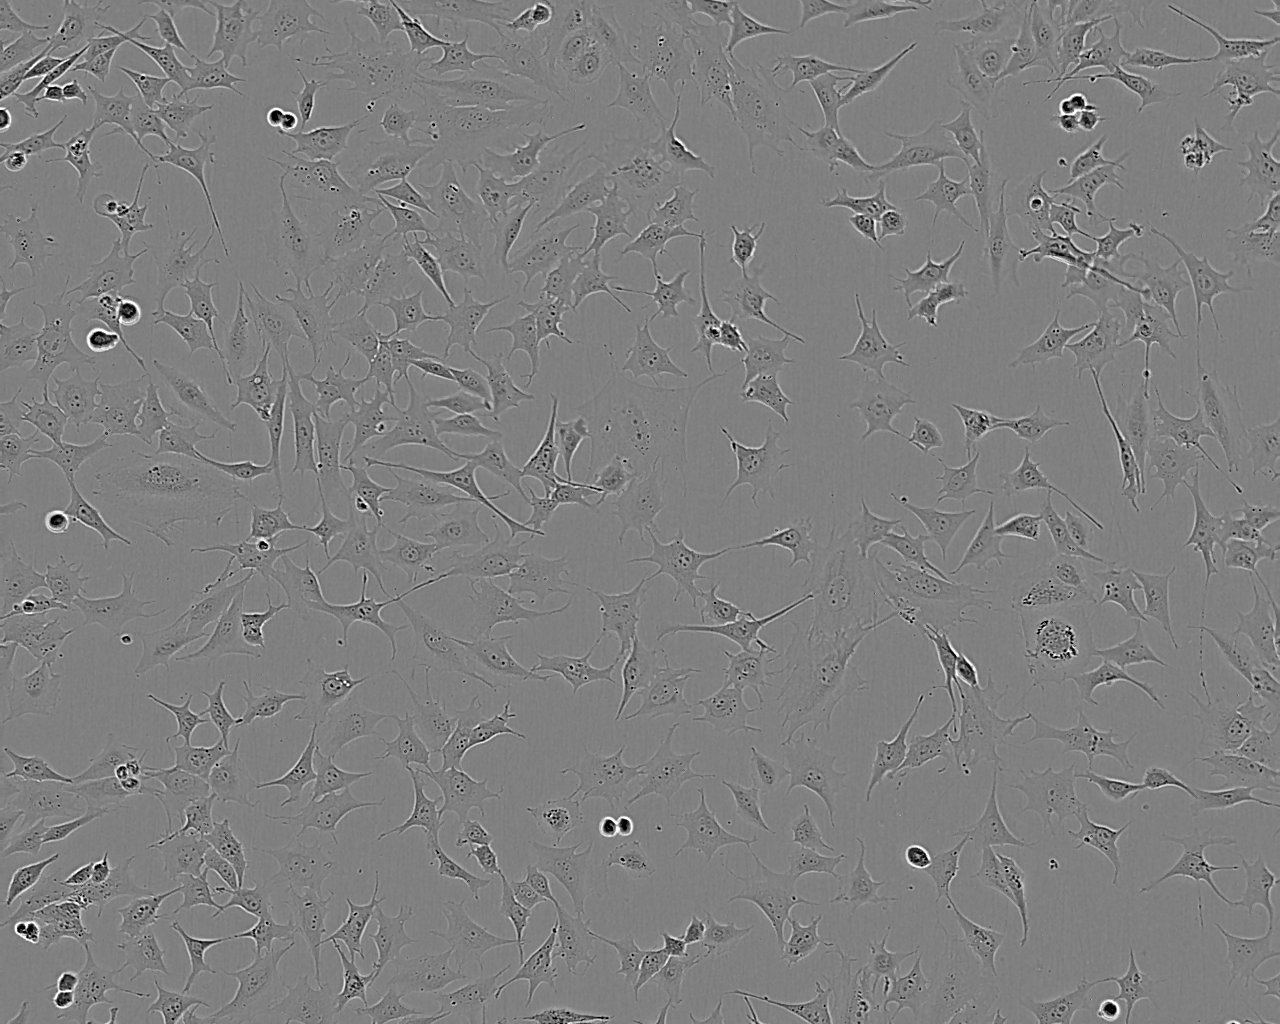 HSC-6 epithelioid cells人口腔鳞癌细胞系,HSC-6 epithelioid cells